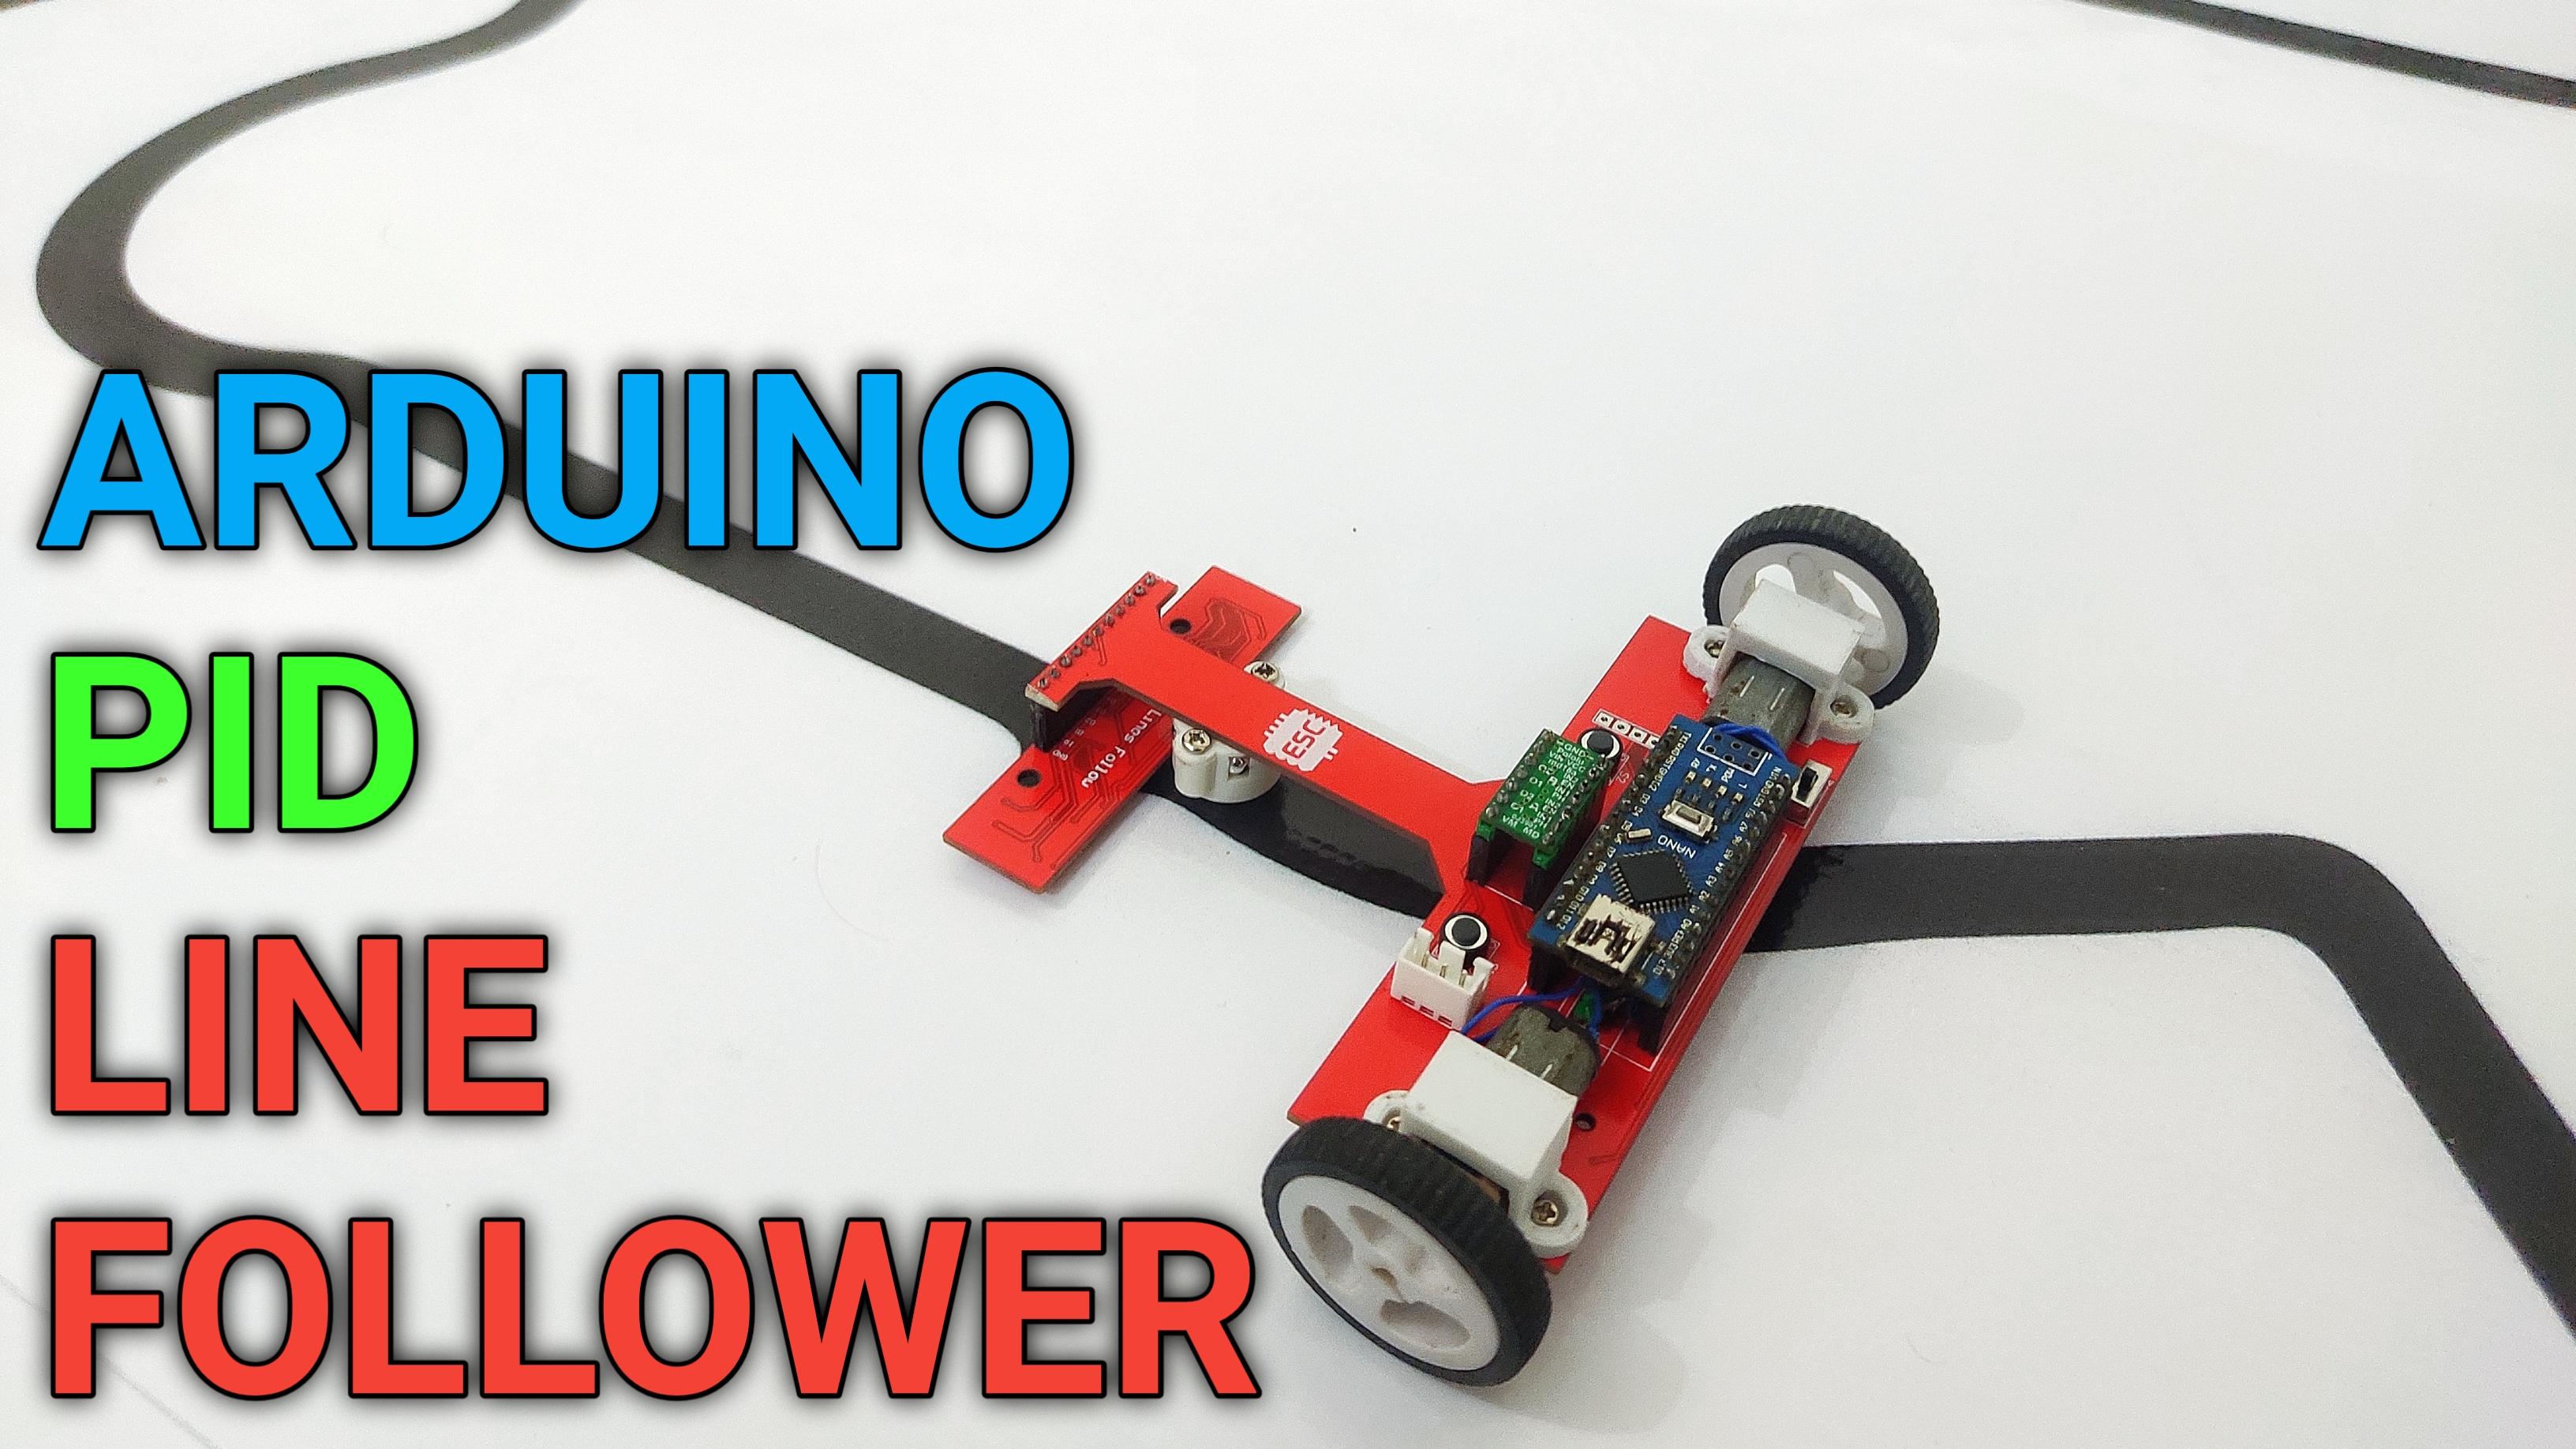 PID LINE FOLLOWER ROBOT USING ARDUINO NANO